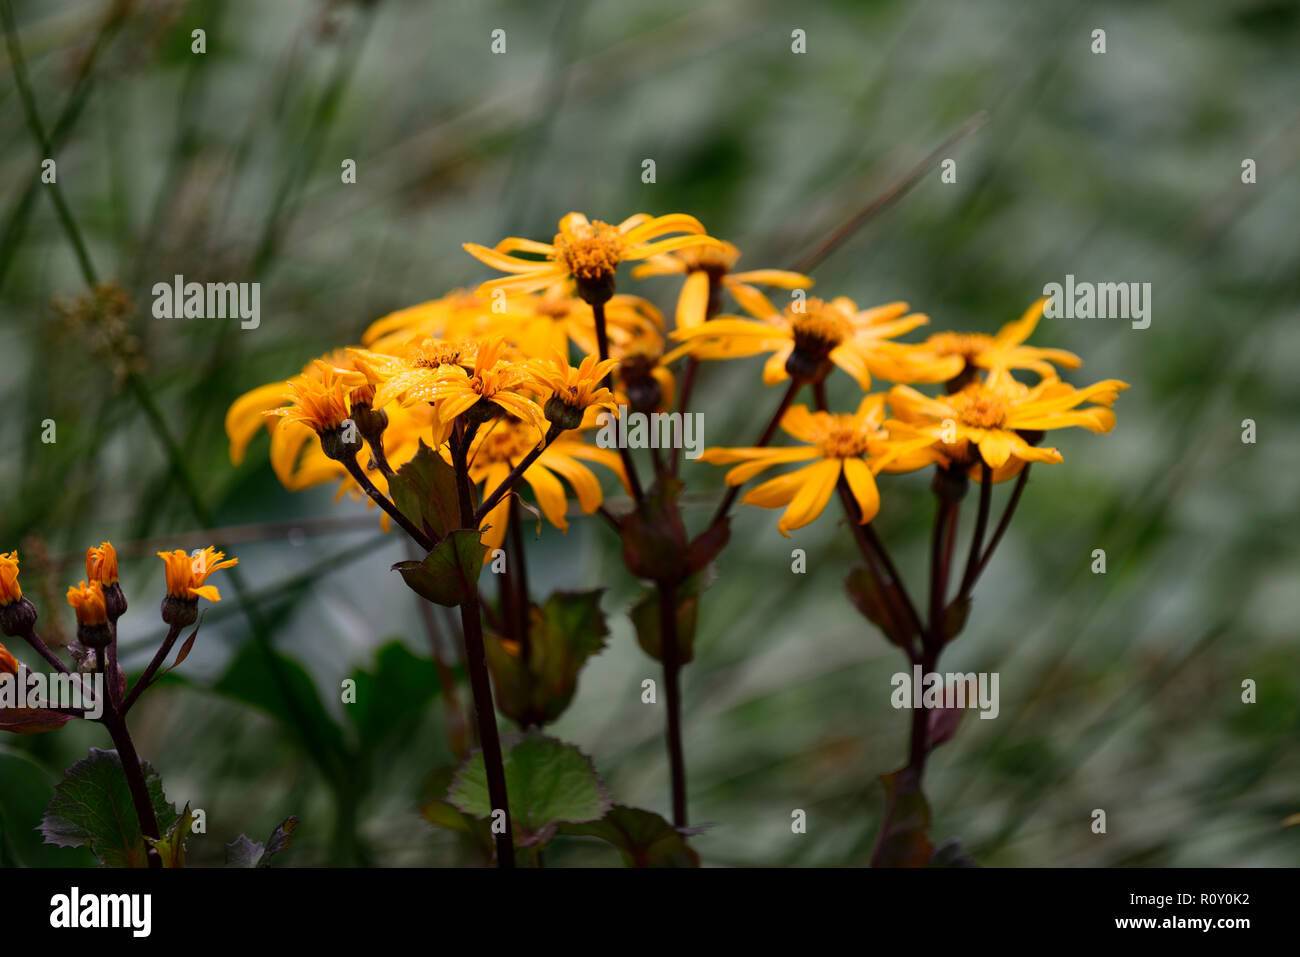 ligularia dentata britt marie crawford,yellow,flowers,flowering,summer,perennials,RM Floral Stock Photo